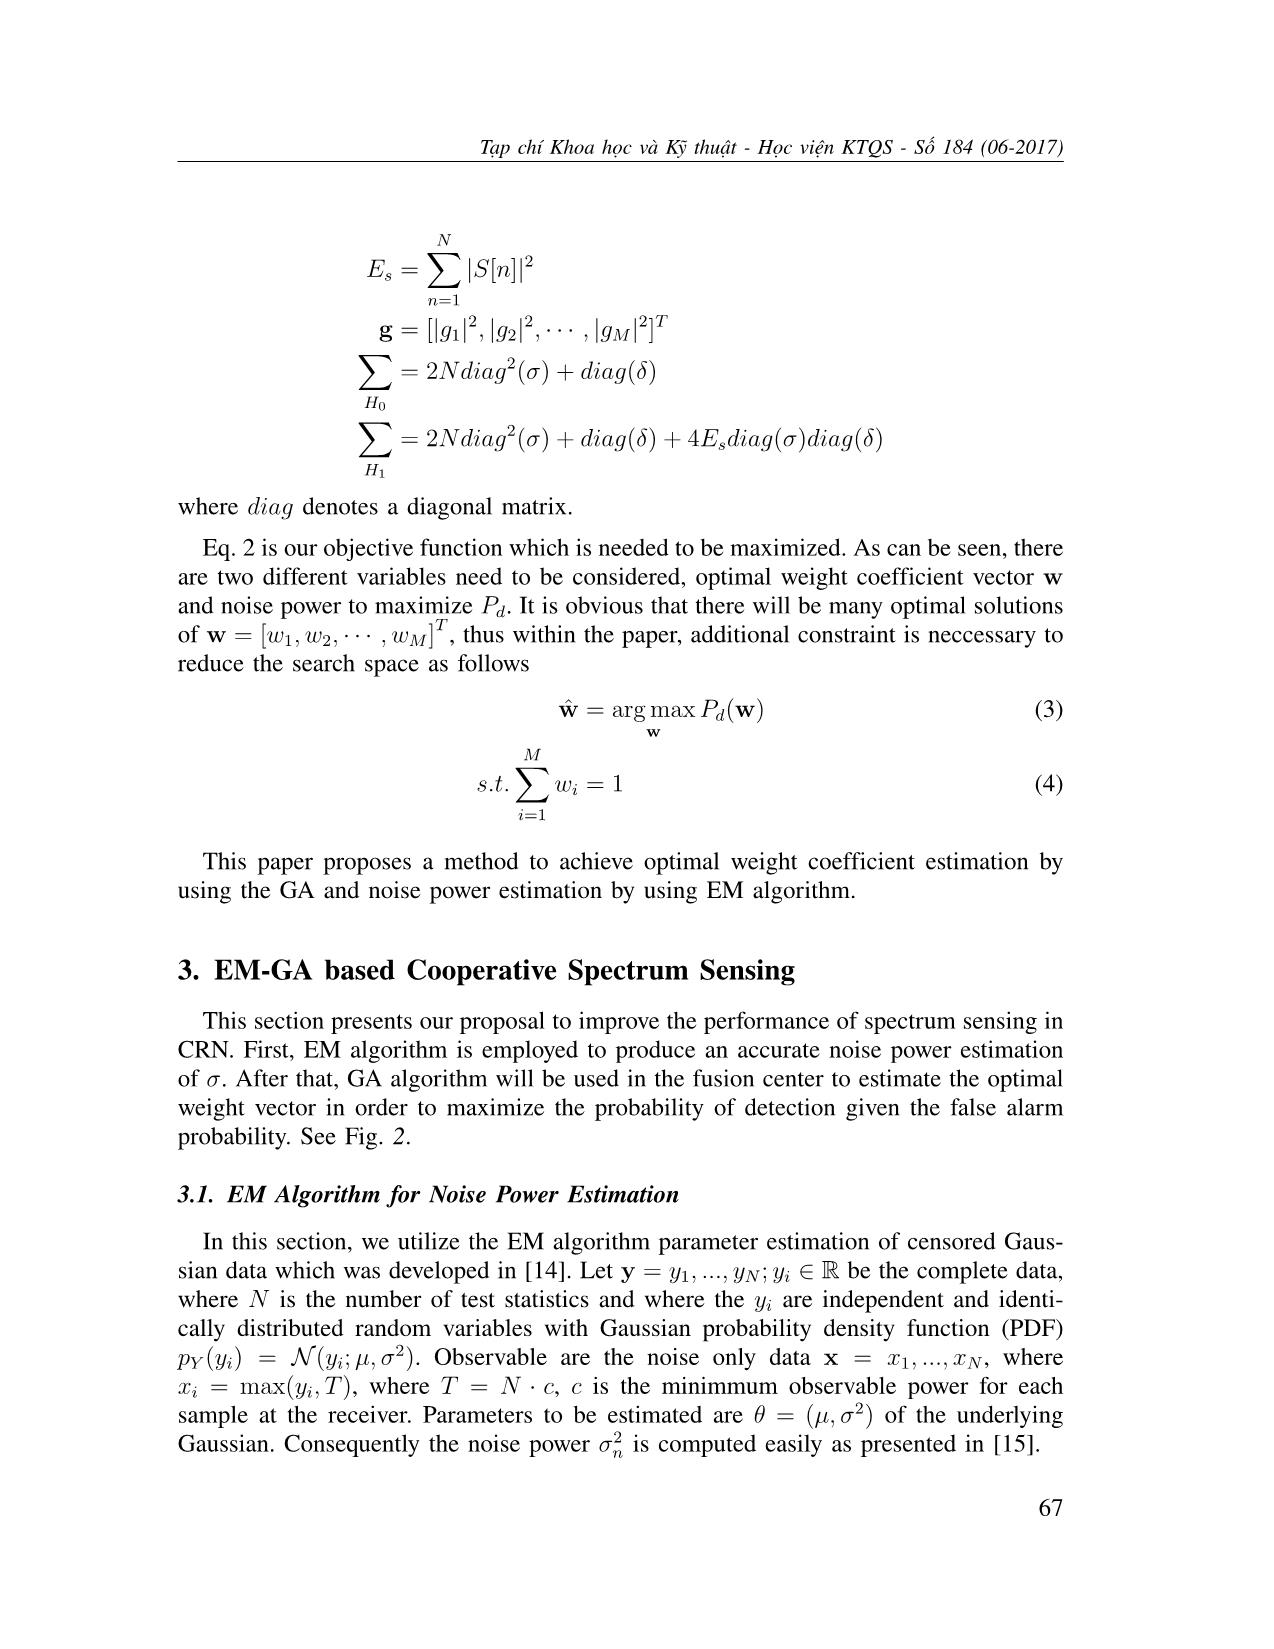 Enhancement of cooperative spectrum sensing employing genetic algorithm and noise power estimation trang 4